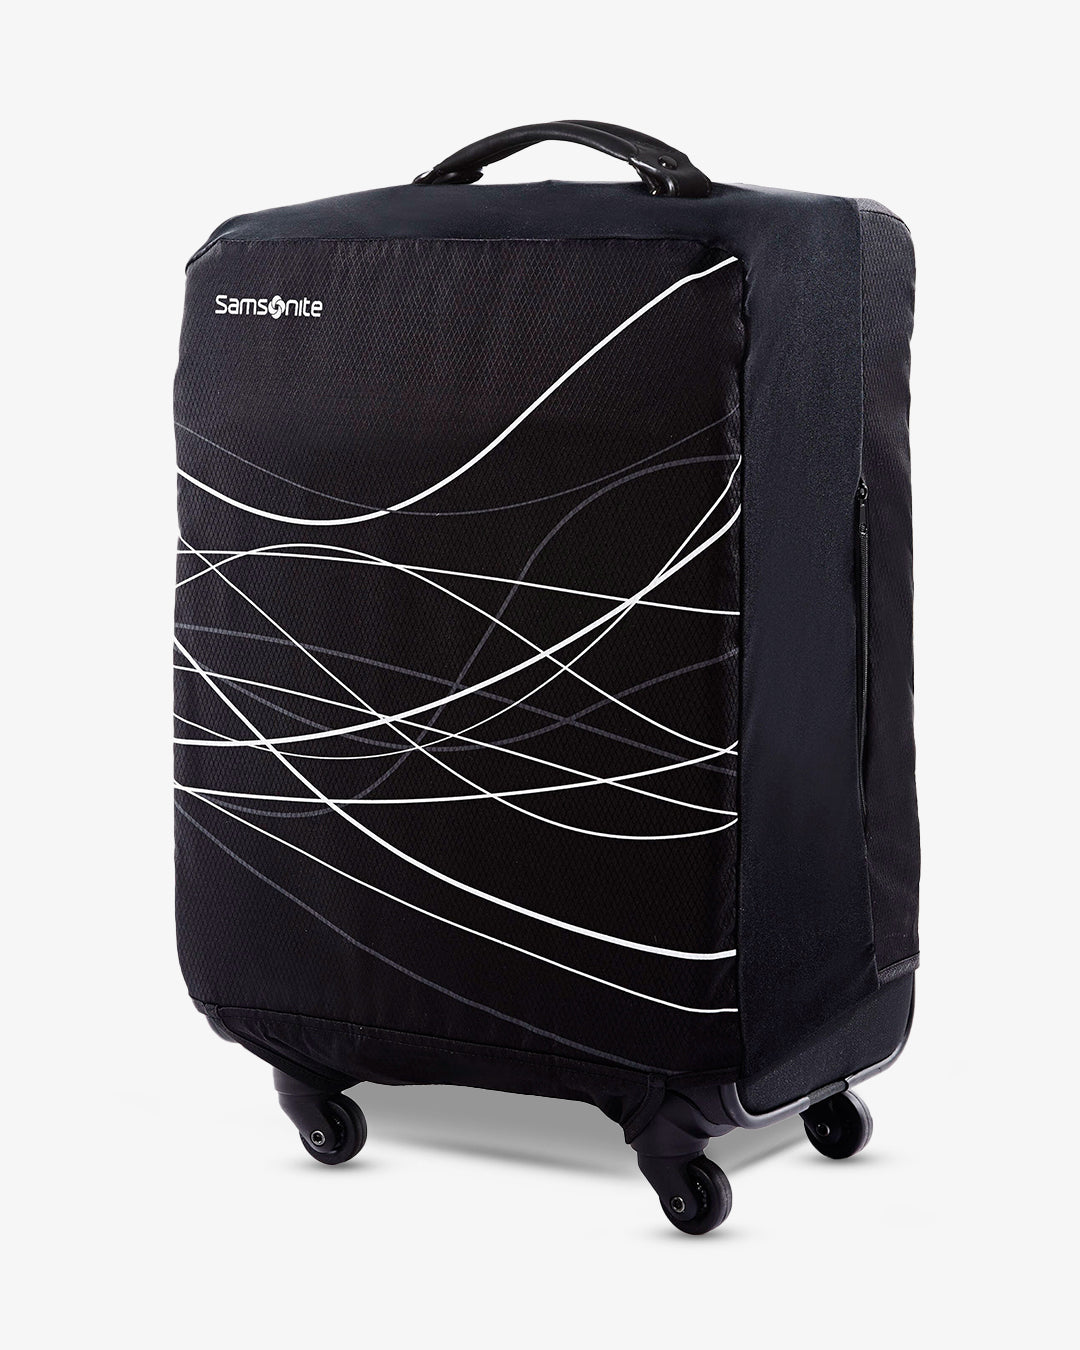 Samsonite Foldable Luggage Cover (LARGE)